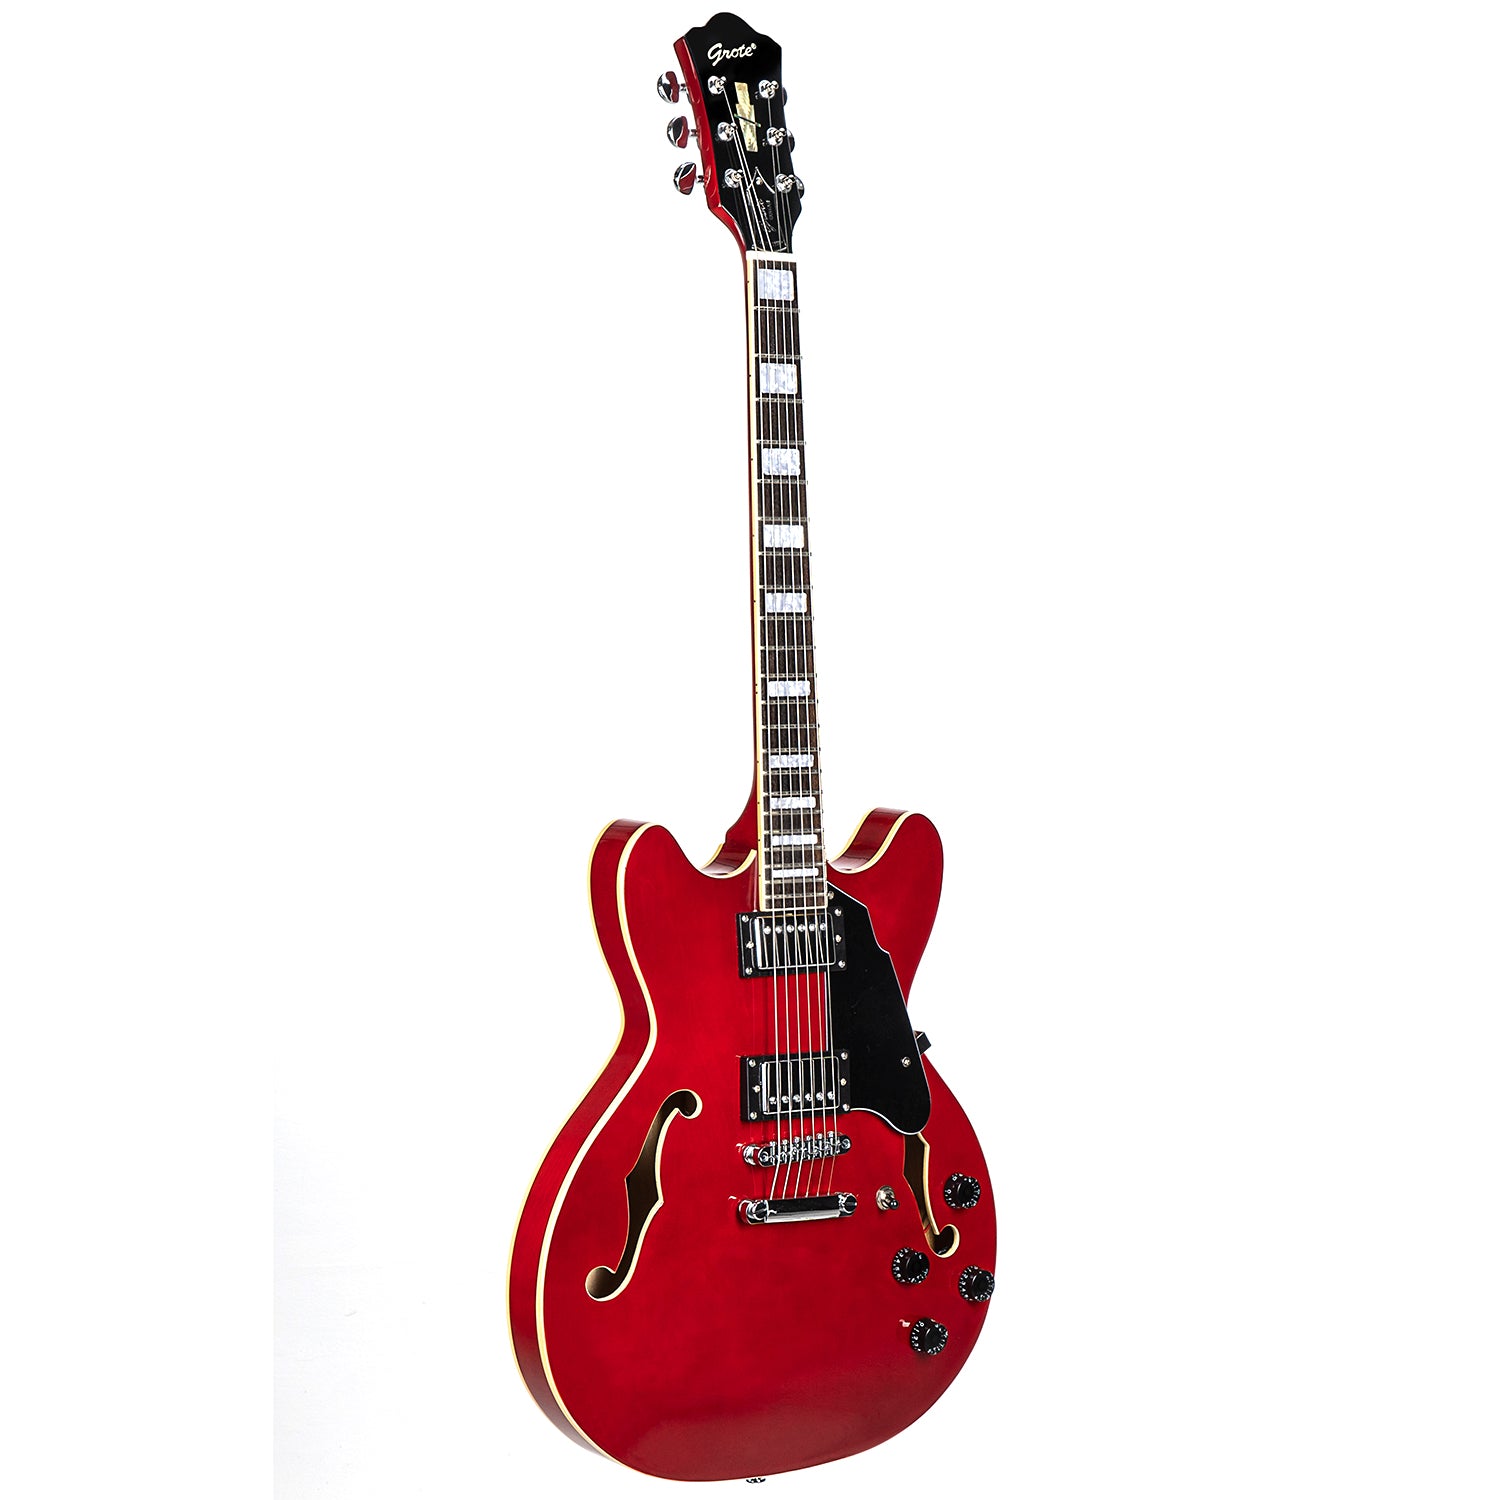 Accumulatie Onbemand Aap GROTE SEMI-HOLLOW BODY ELECTRIC GUITAR CHERRY RED GRWB-TR35 – Grote Guitar